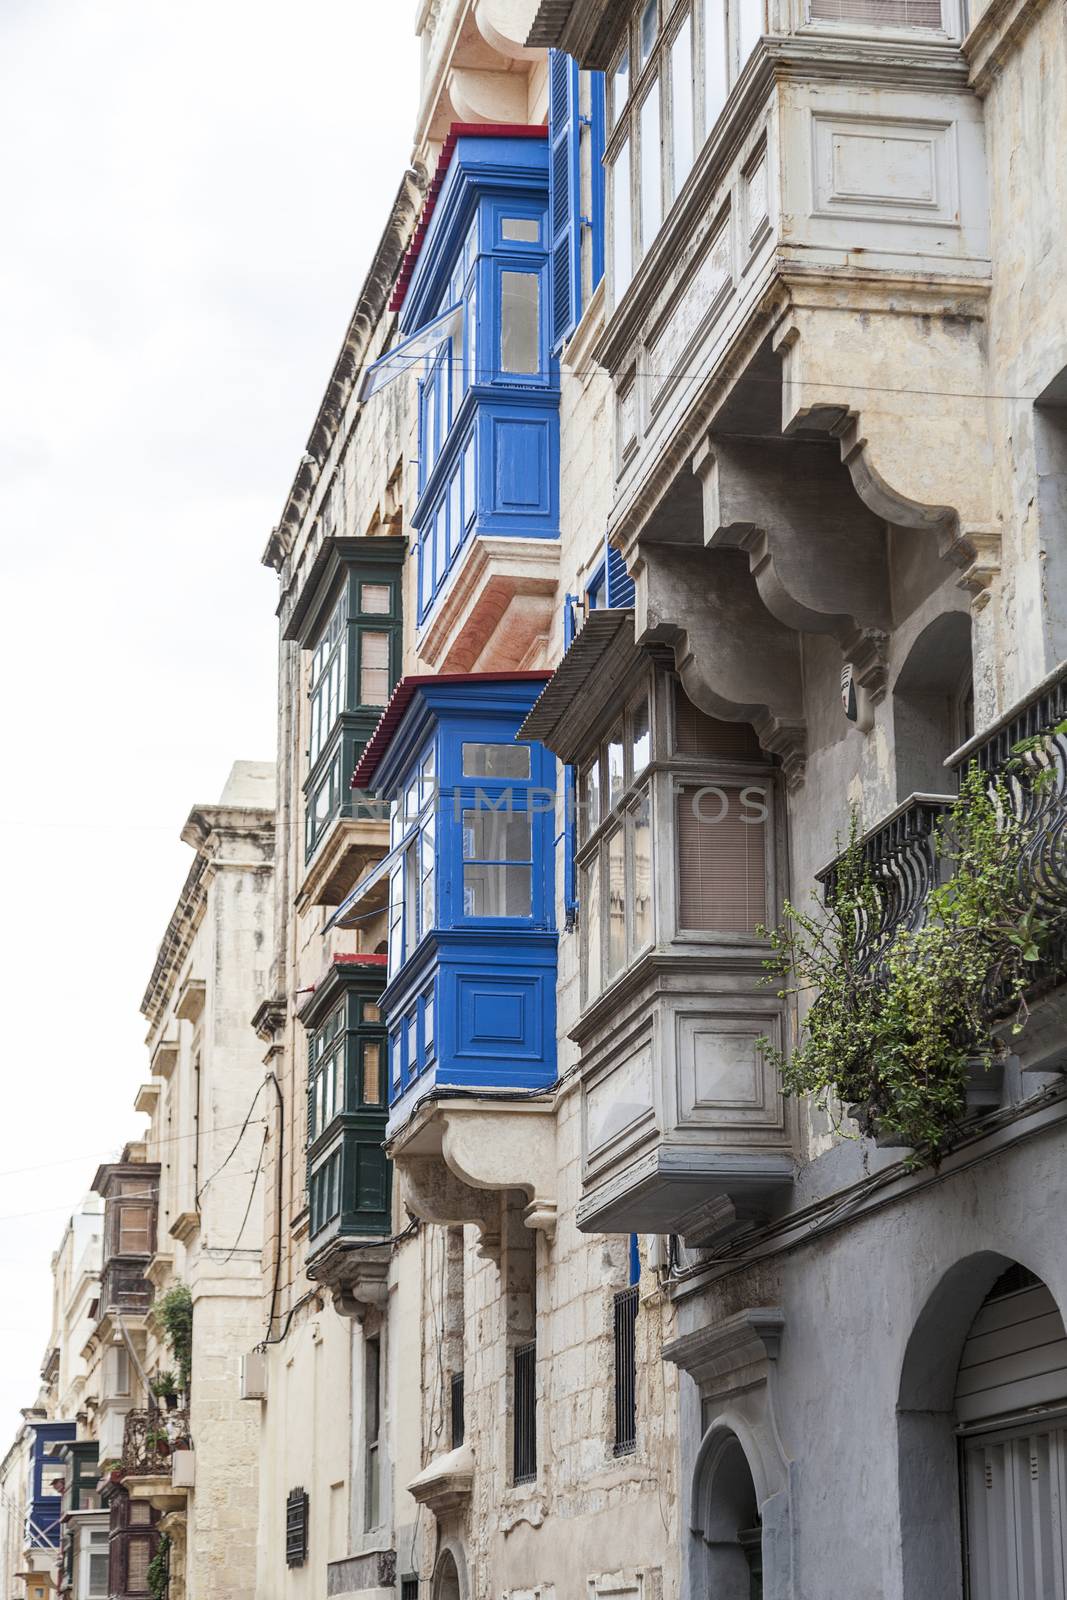 
Colorful Maltese balconies in capital of Malta - Valletta, Europe.